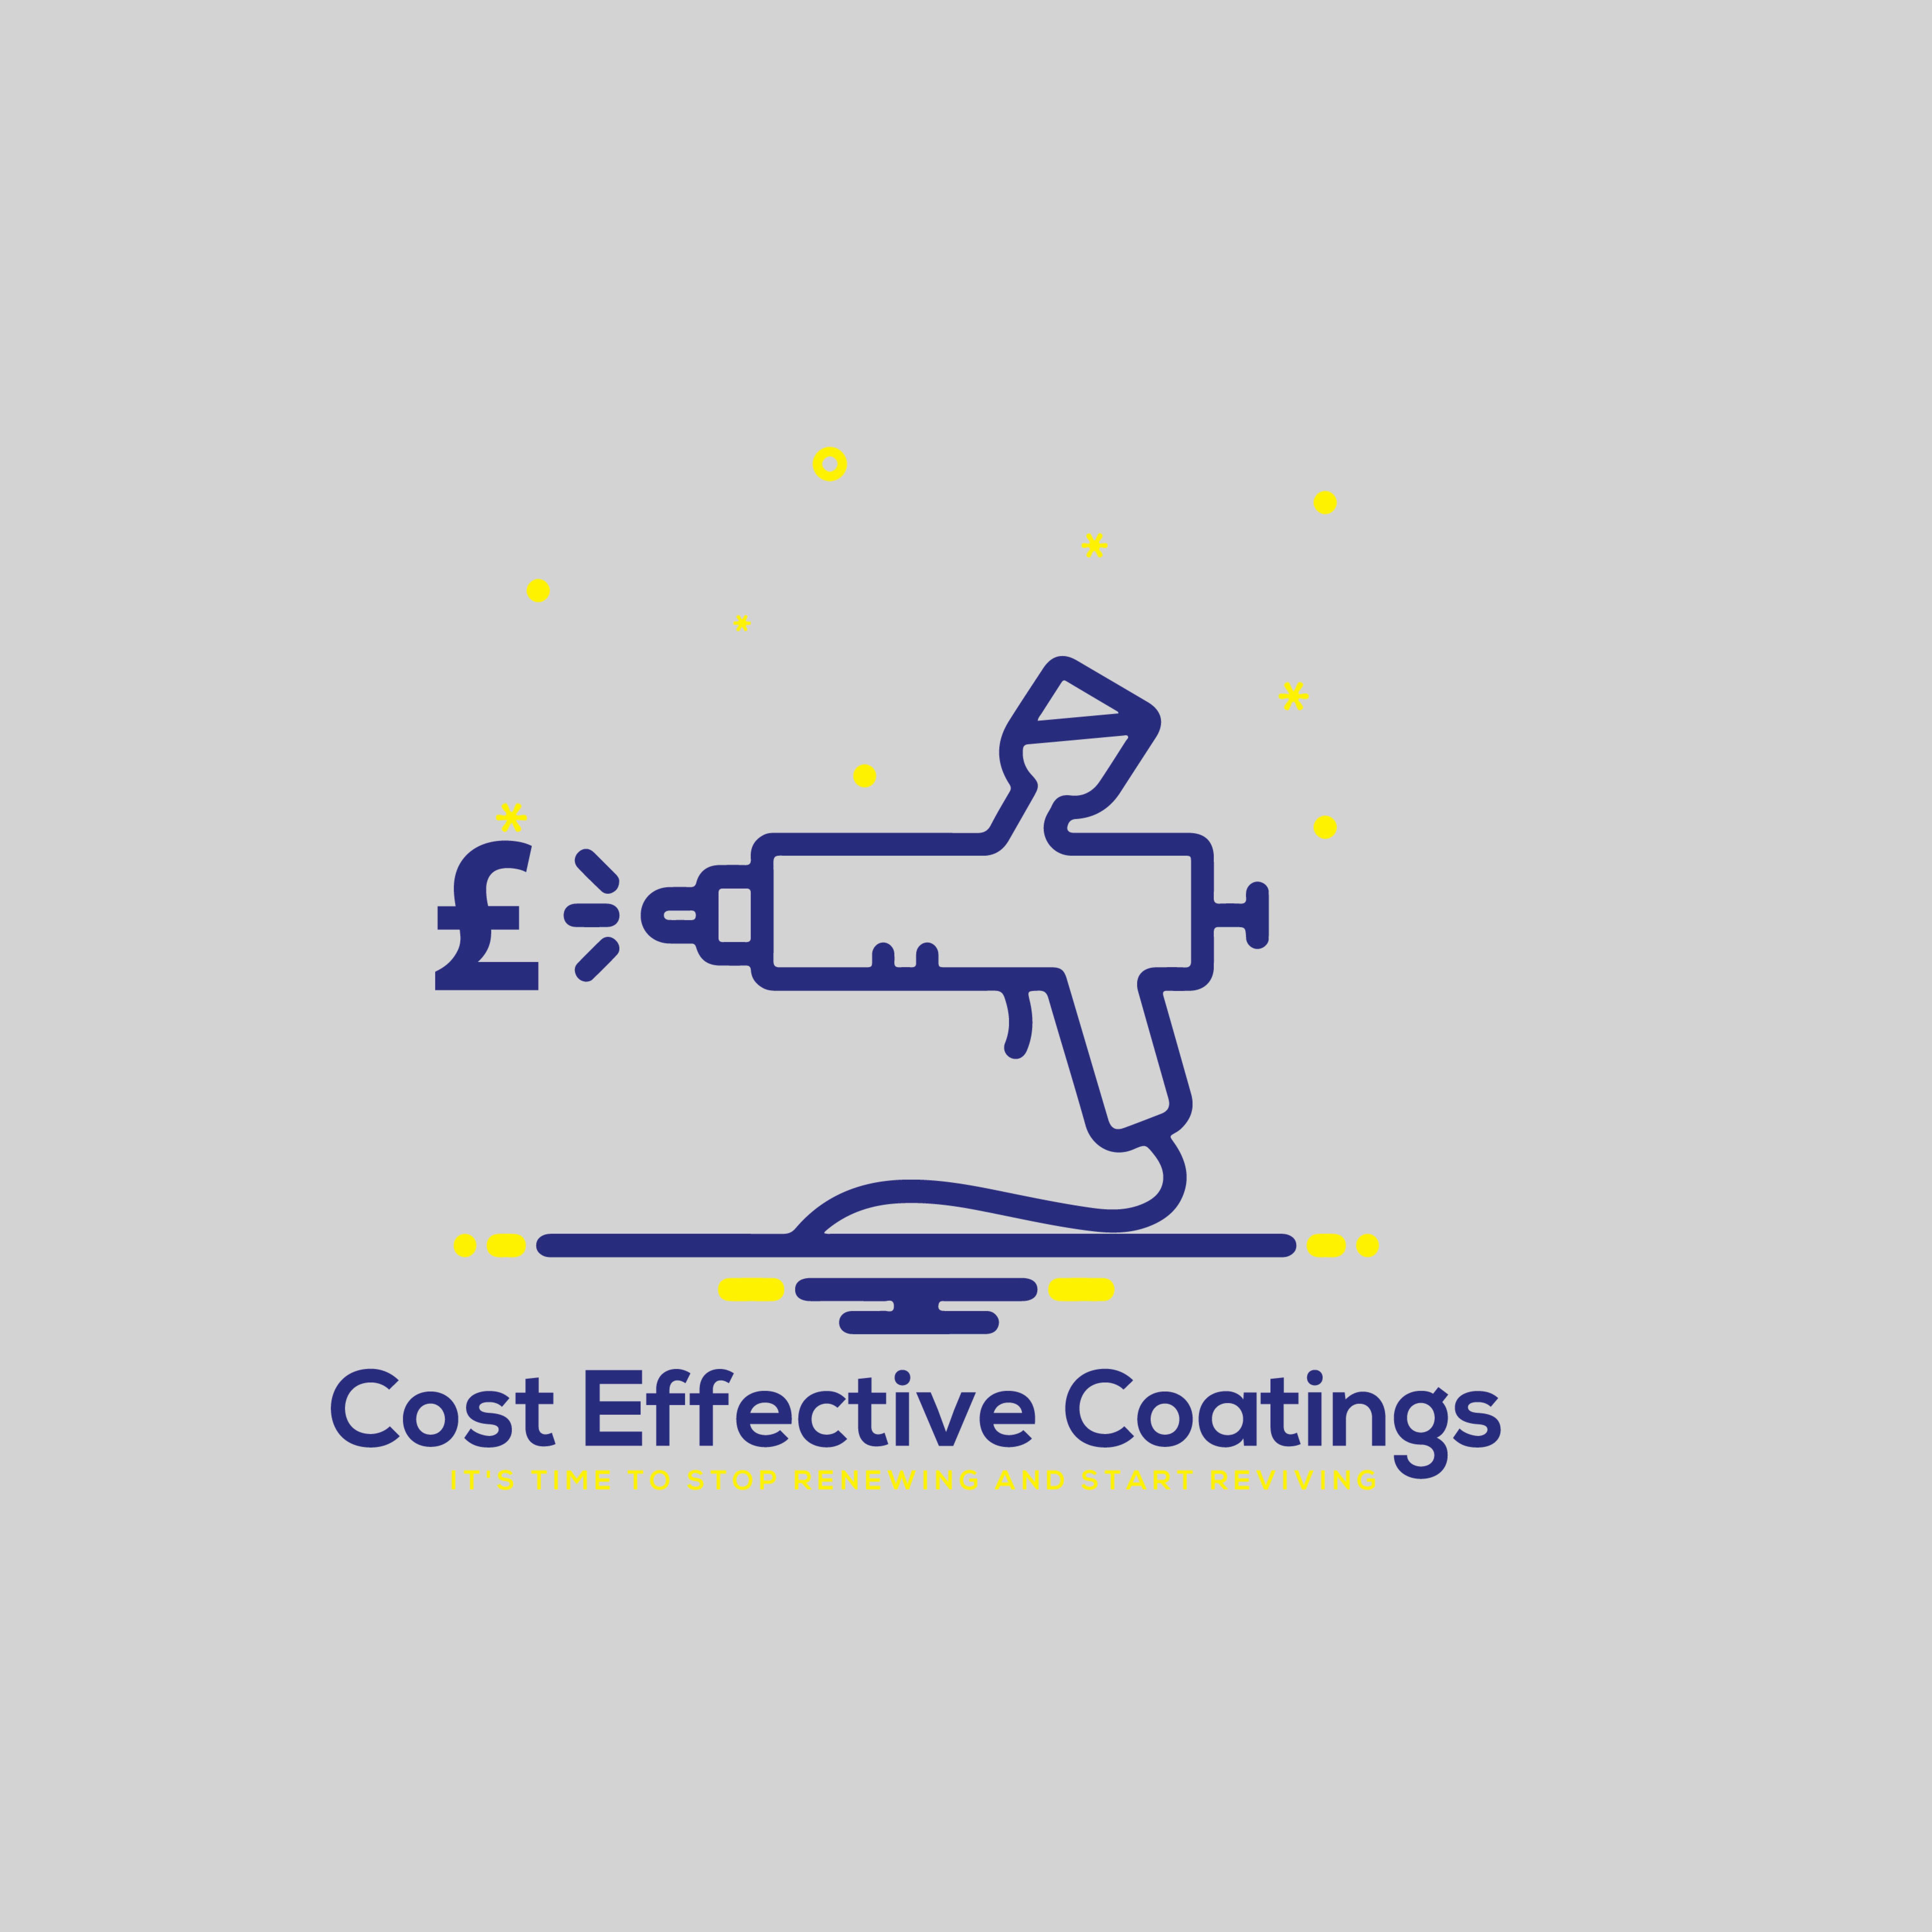 Cost £ffective Coatings